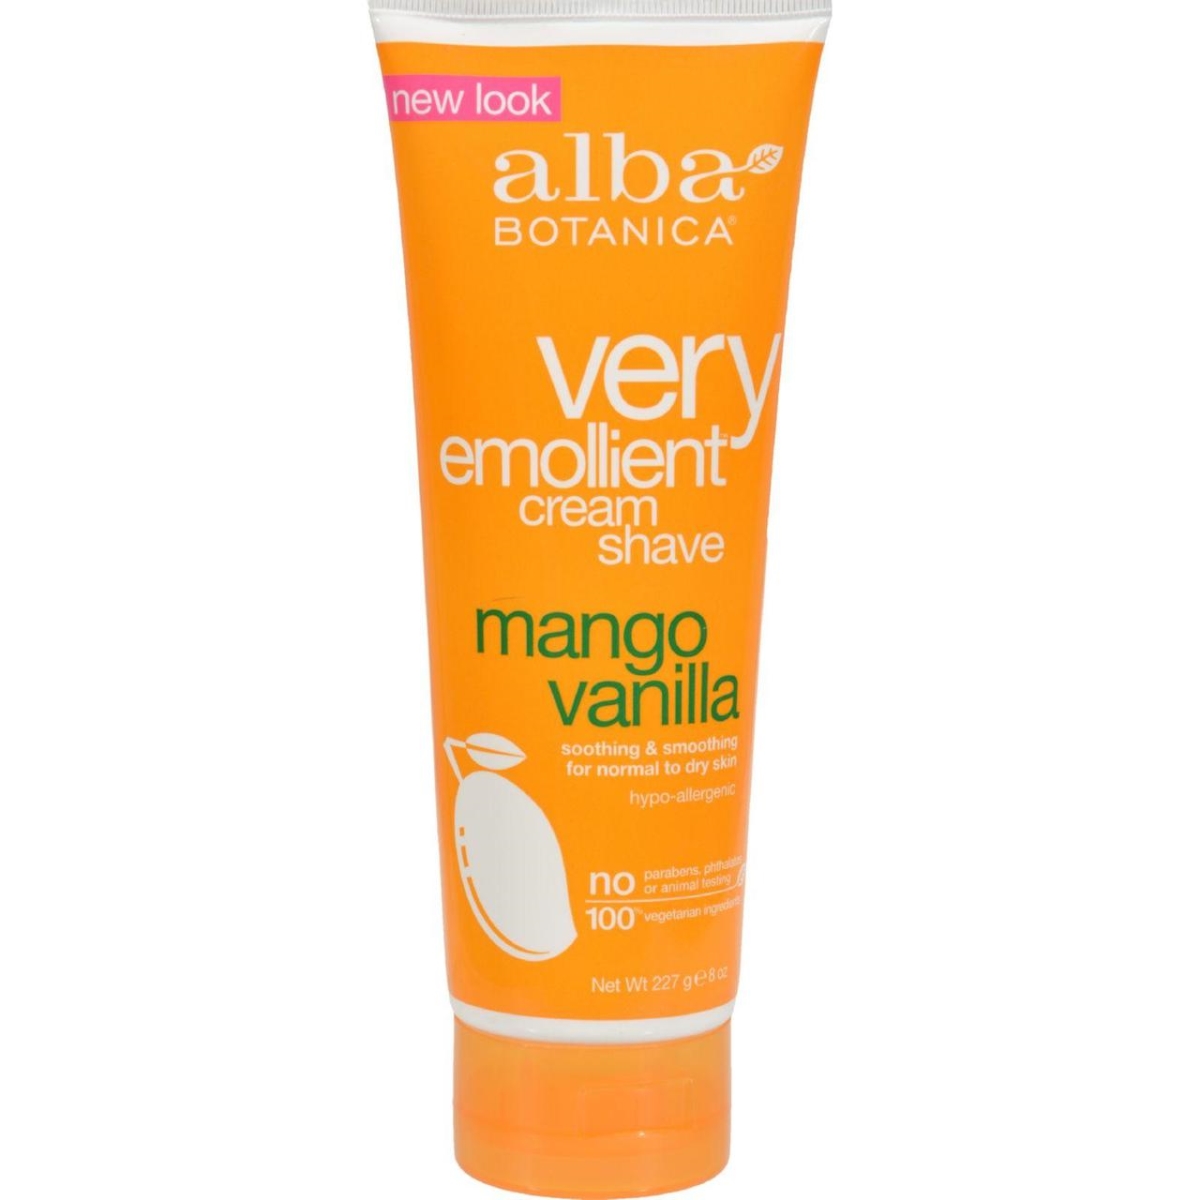 Hg0885723 8 Oz Very Emollient Cream Shave, Mango Vanilla